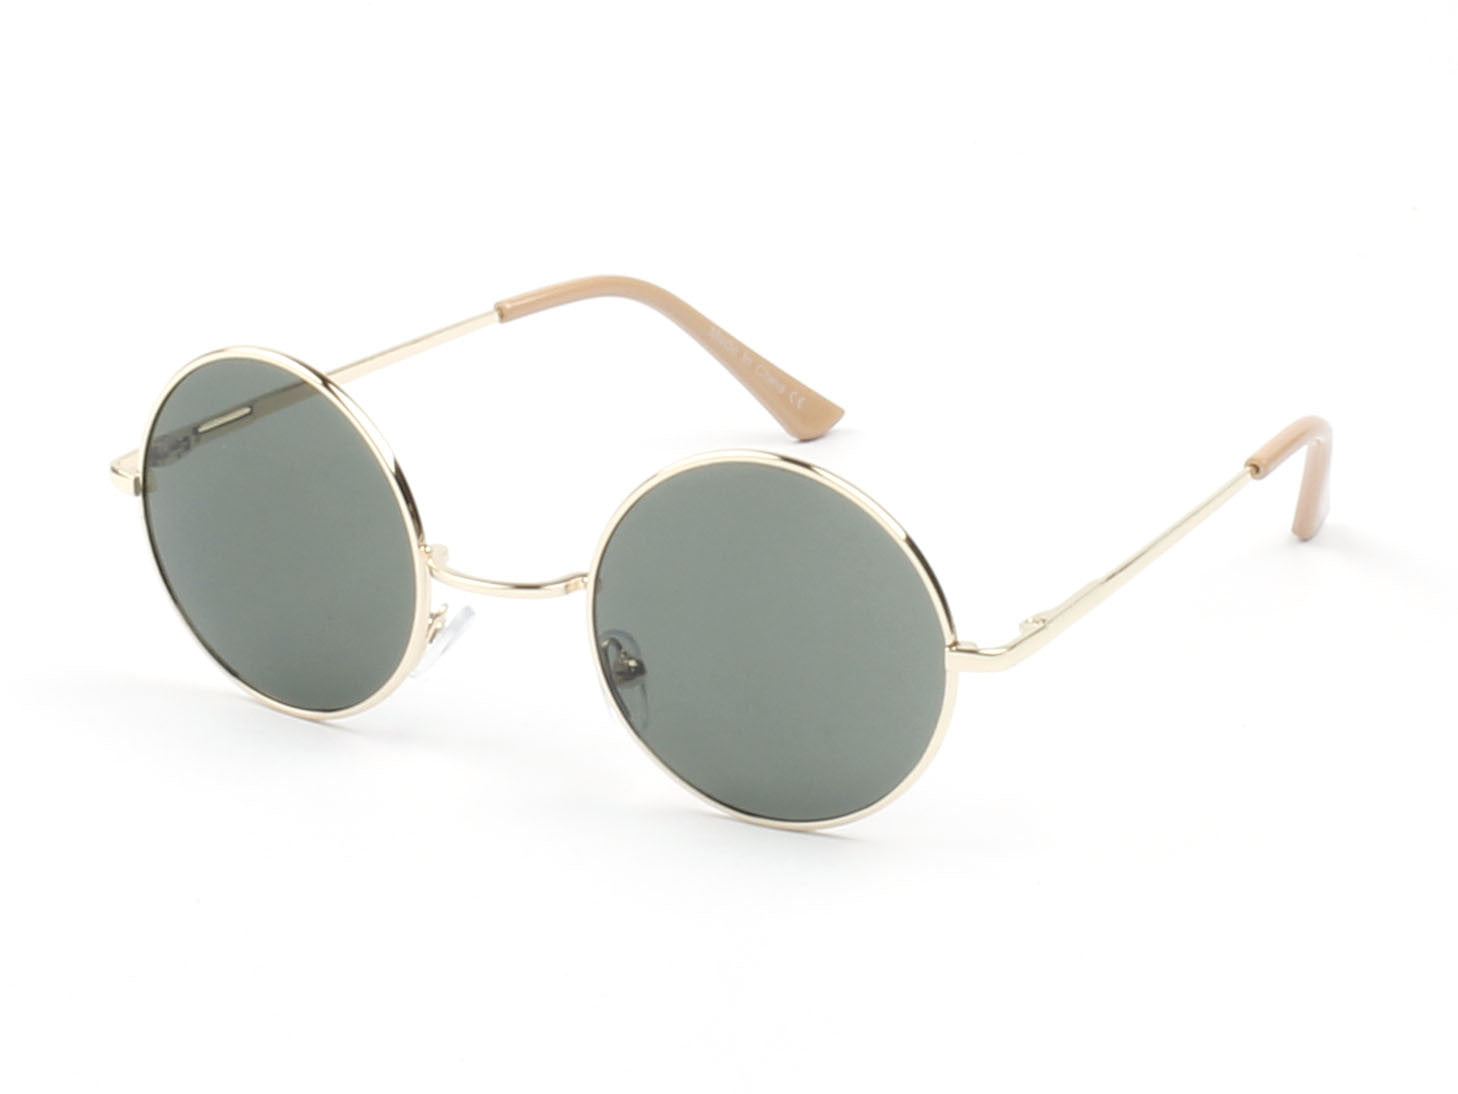 E10 - Retro Lennon-Inspired Circle Round Sunglasses Gold - Navy Green